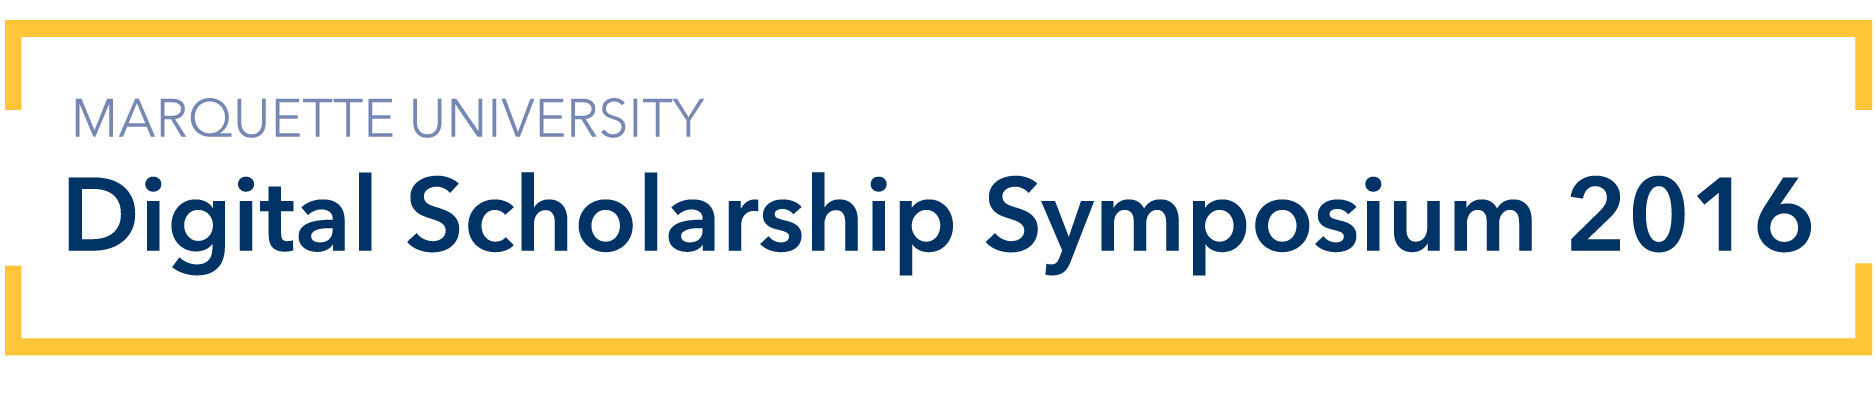 Digital Scholarship Symposium 2016